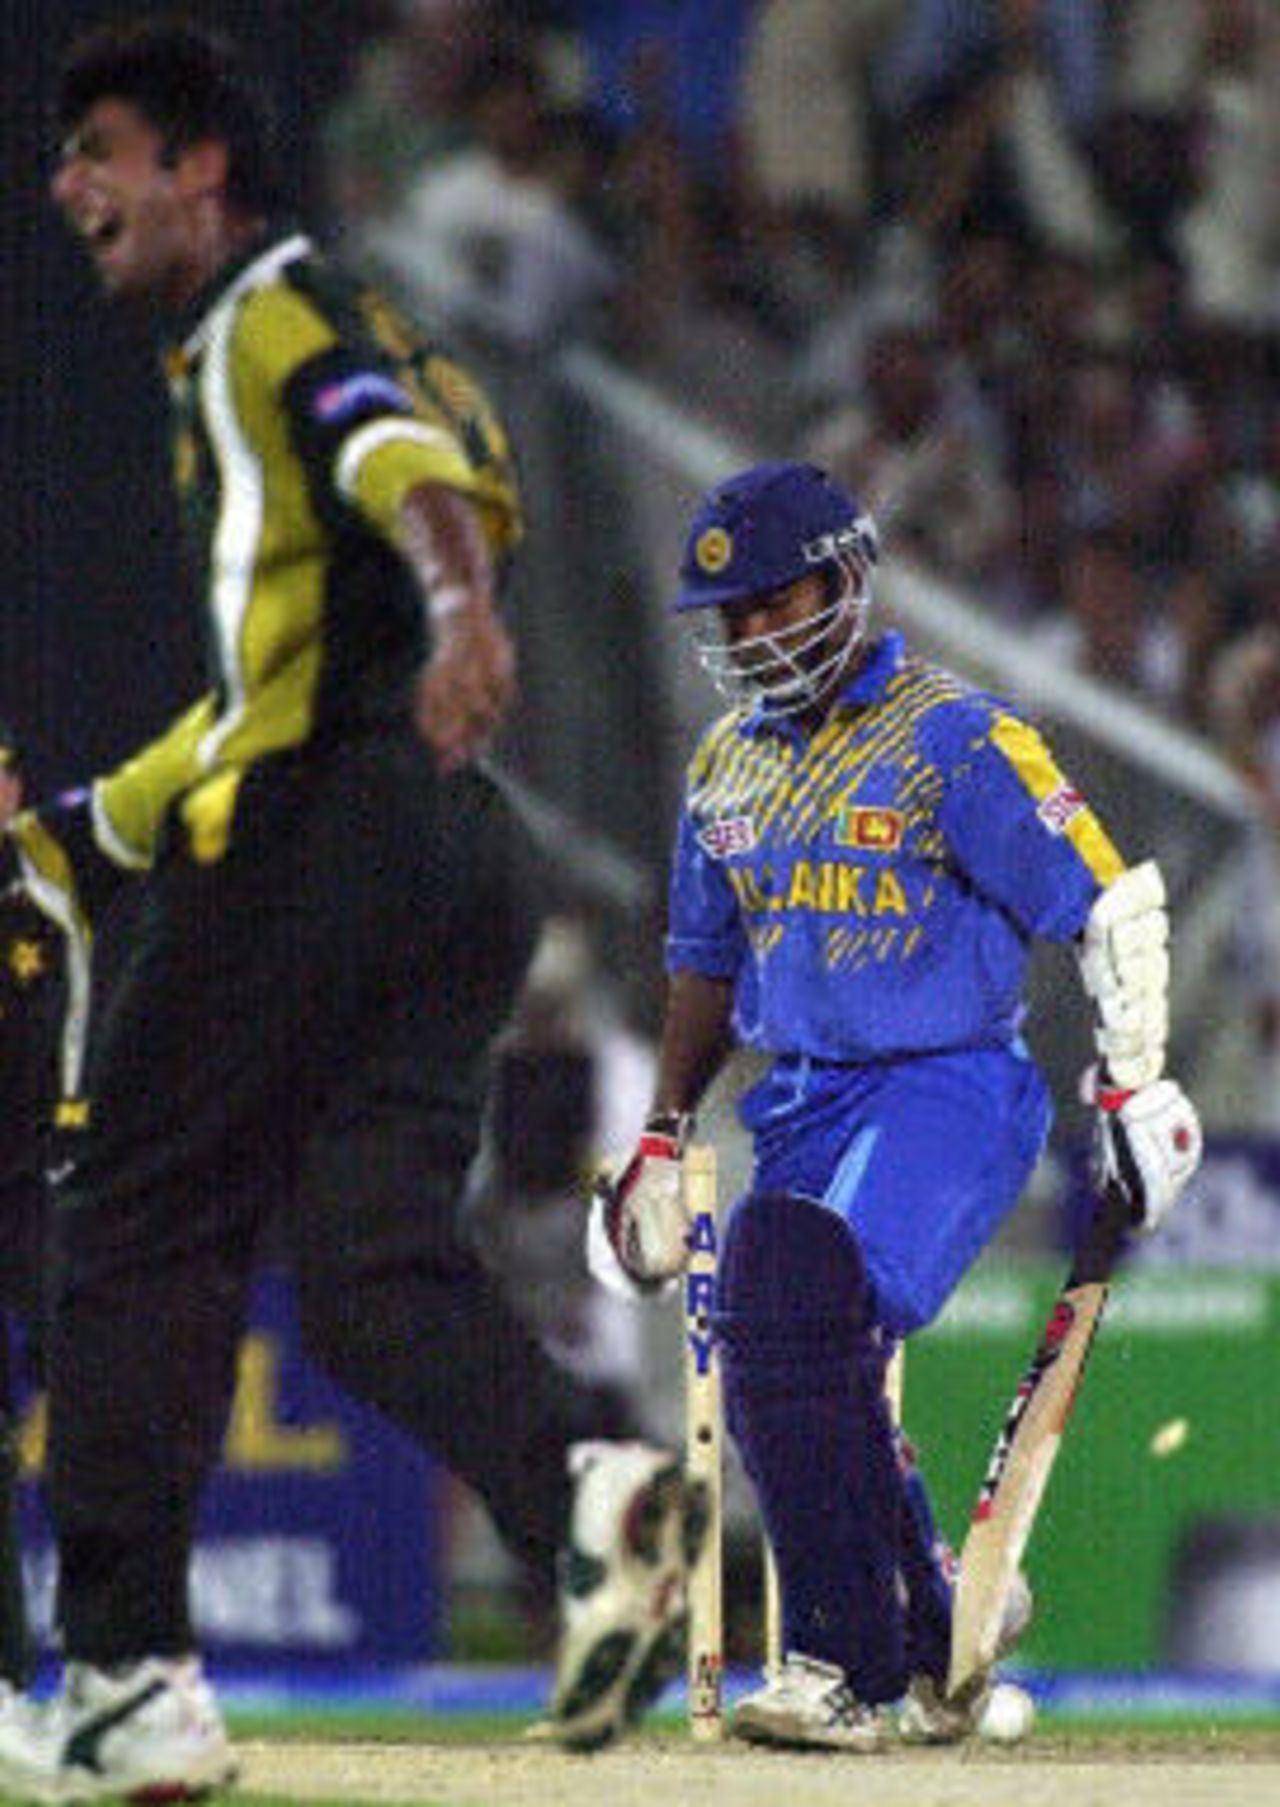 New fast bowler Kashif Raza celebrates his first ODI wicket after bowling Kaluwitharana, ODI 4 at Sharjah, Pakistan v Sri Lanka, 13 April 2001